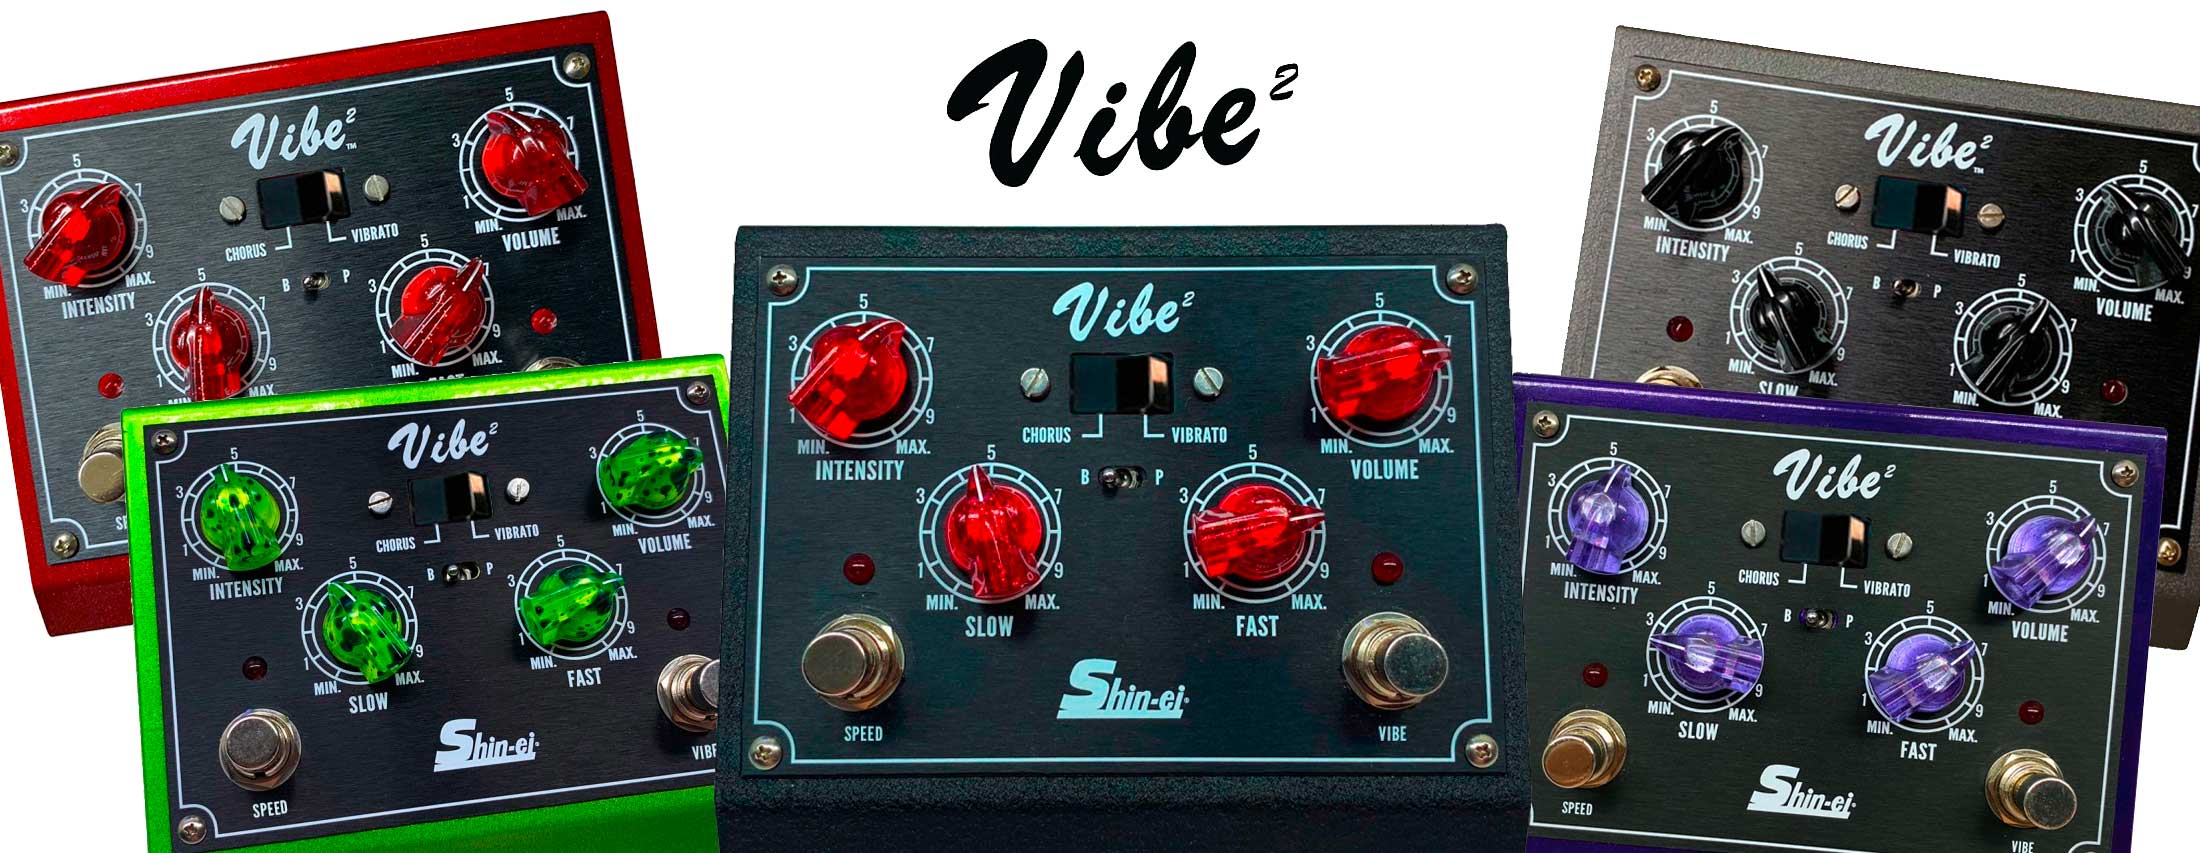 Vibe-2